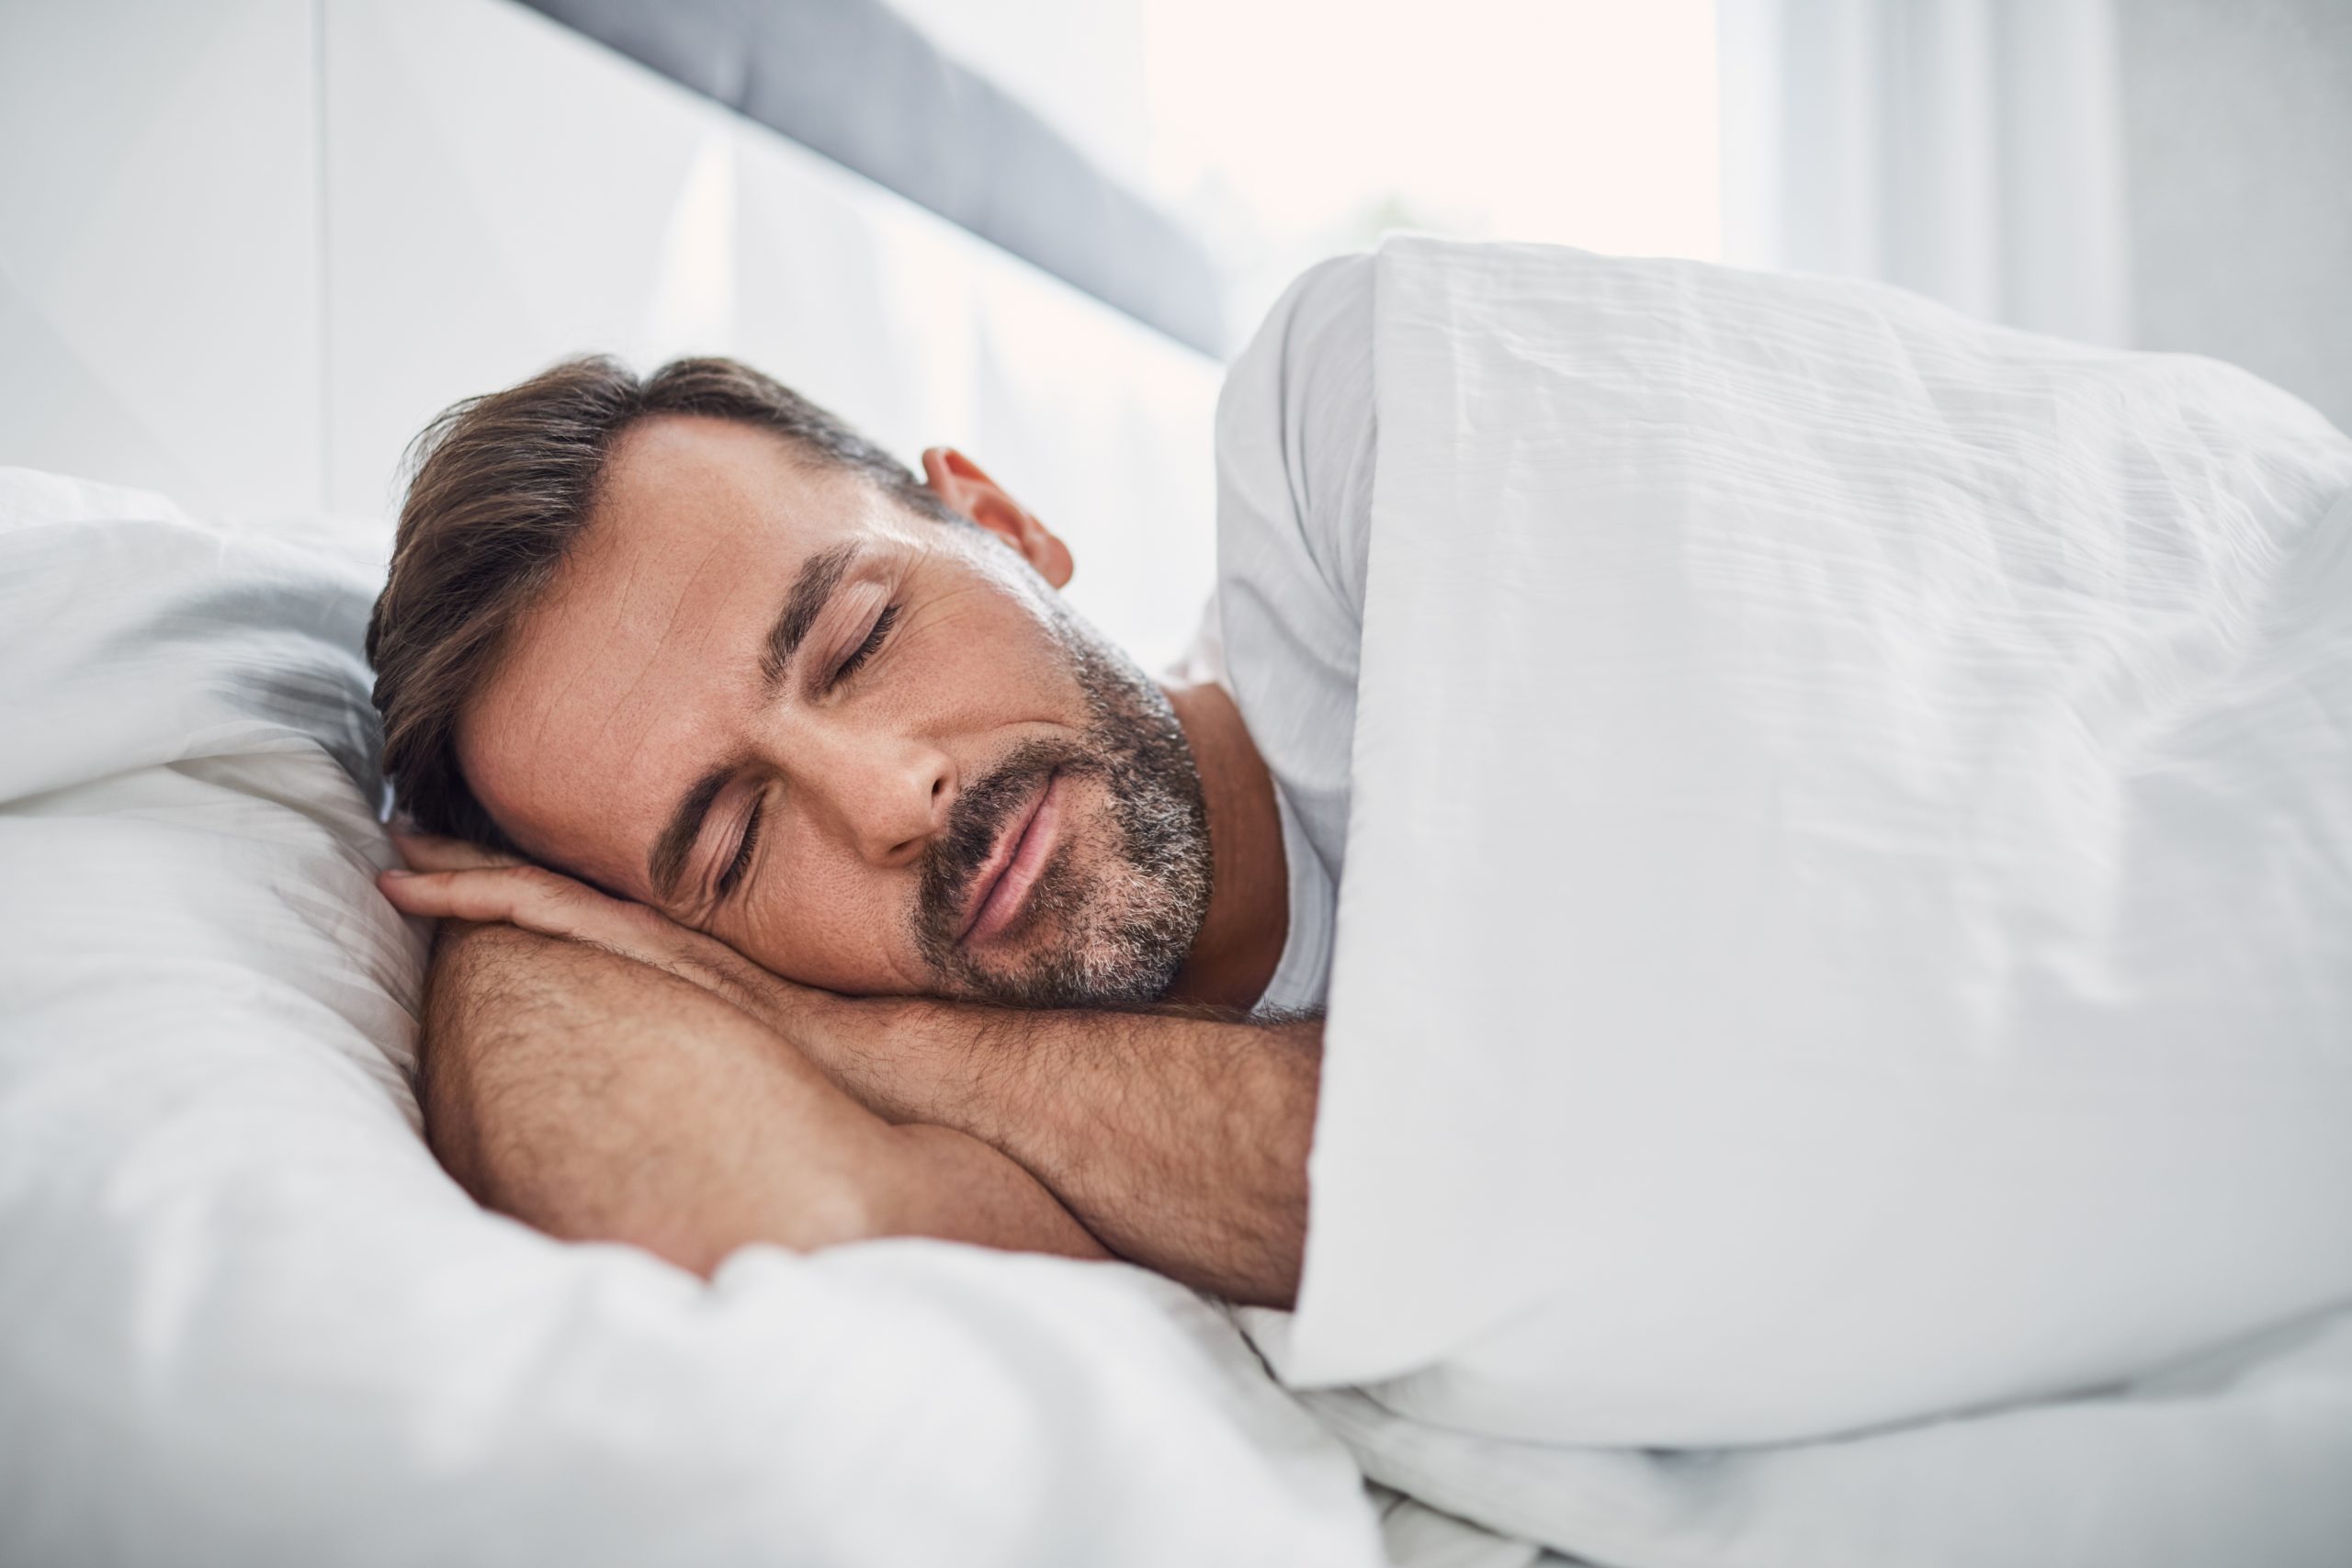 Can sleep help a sore throat?